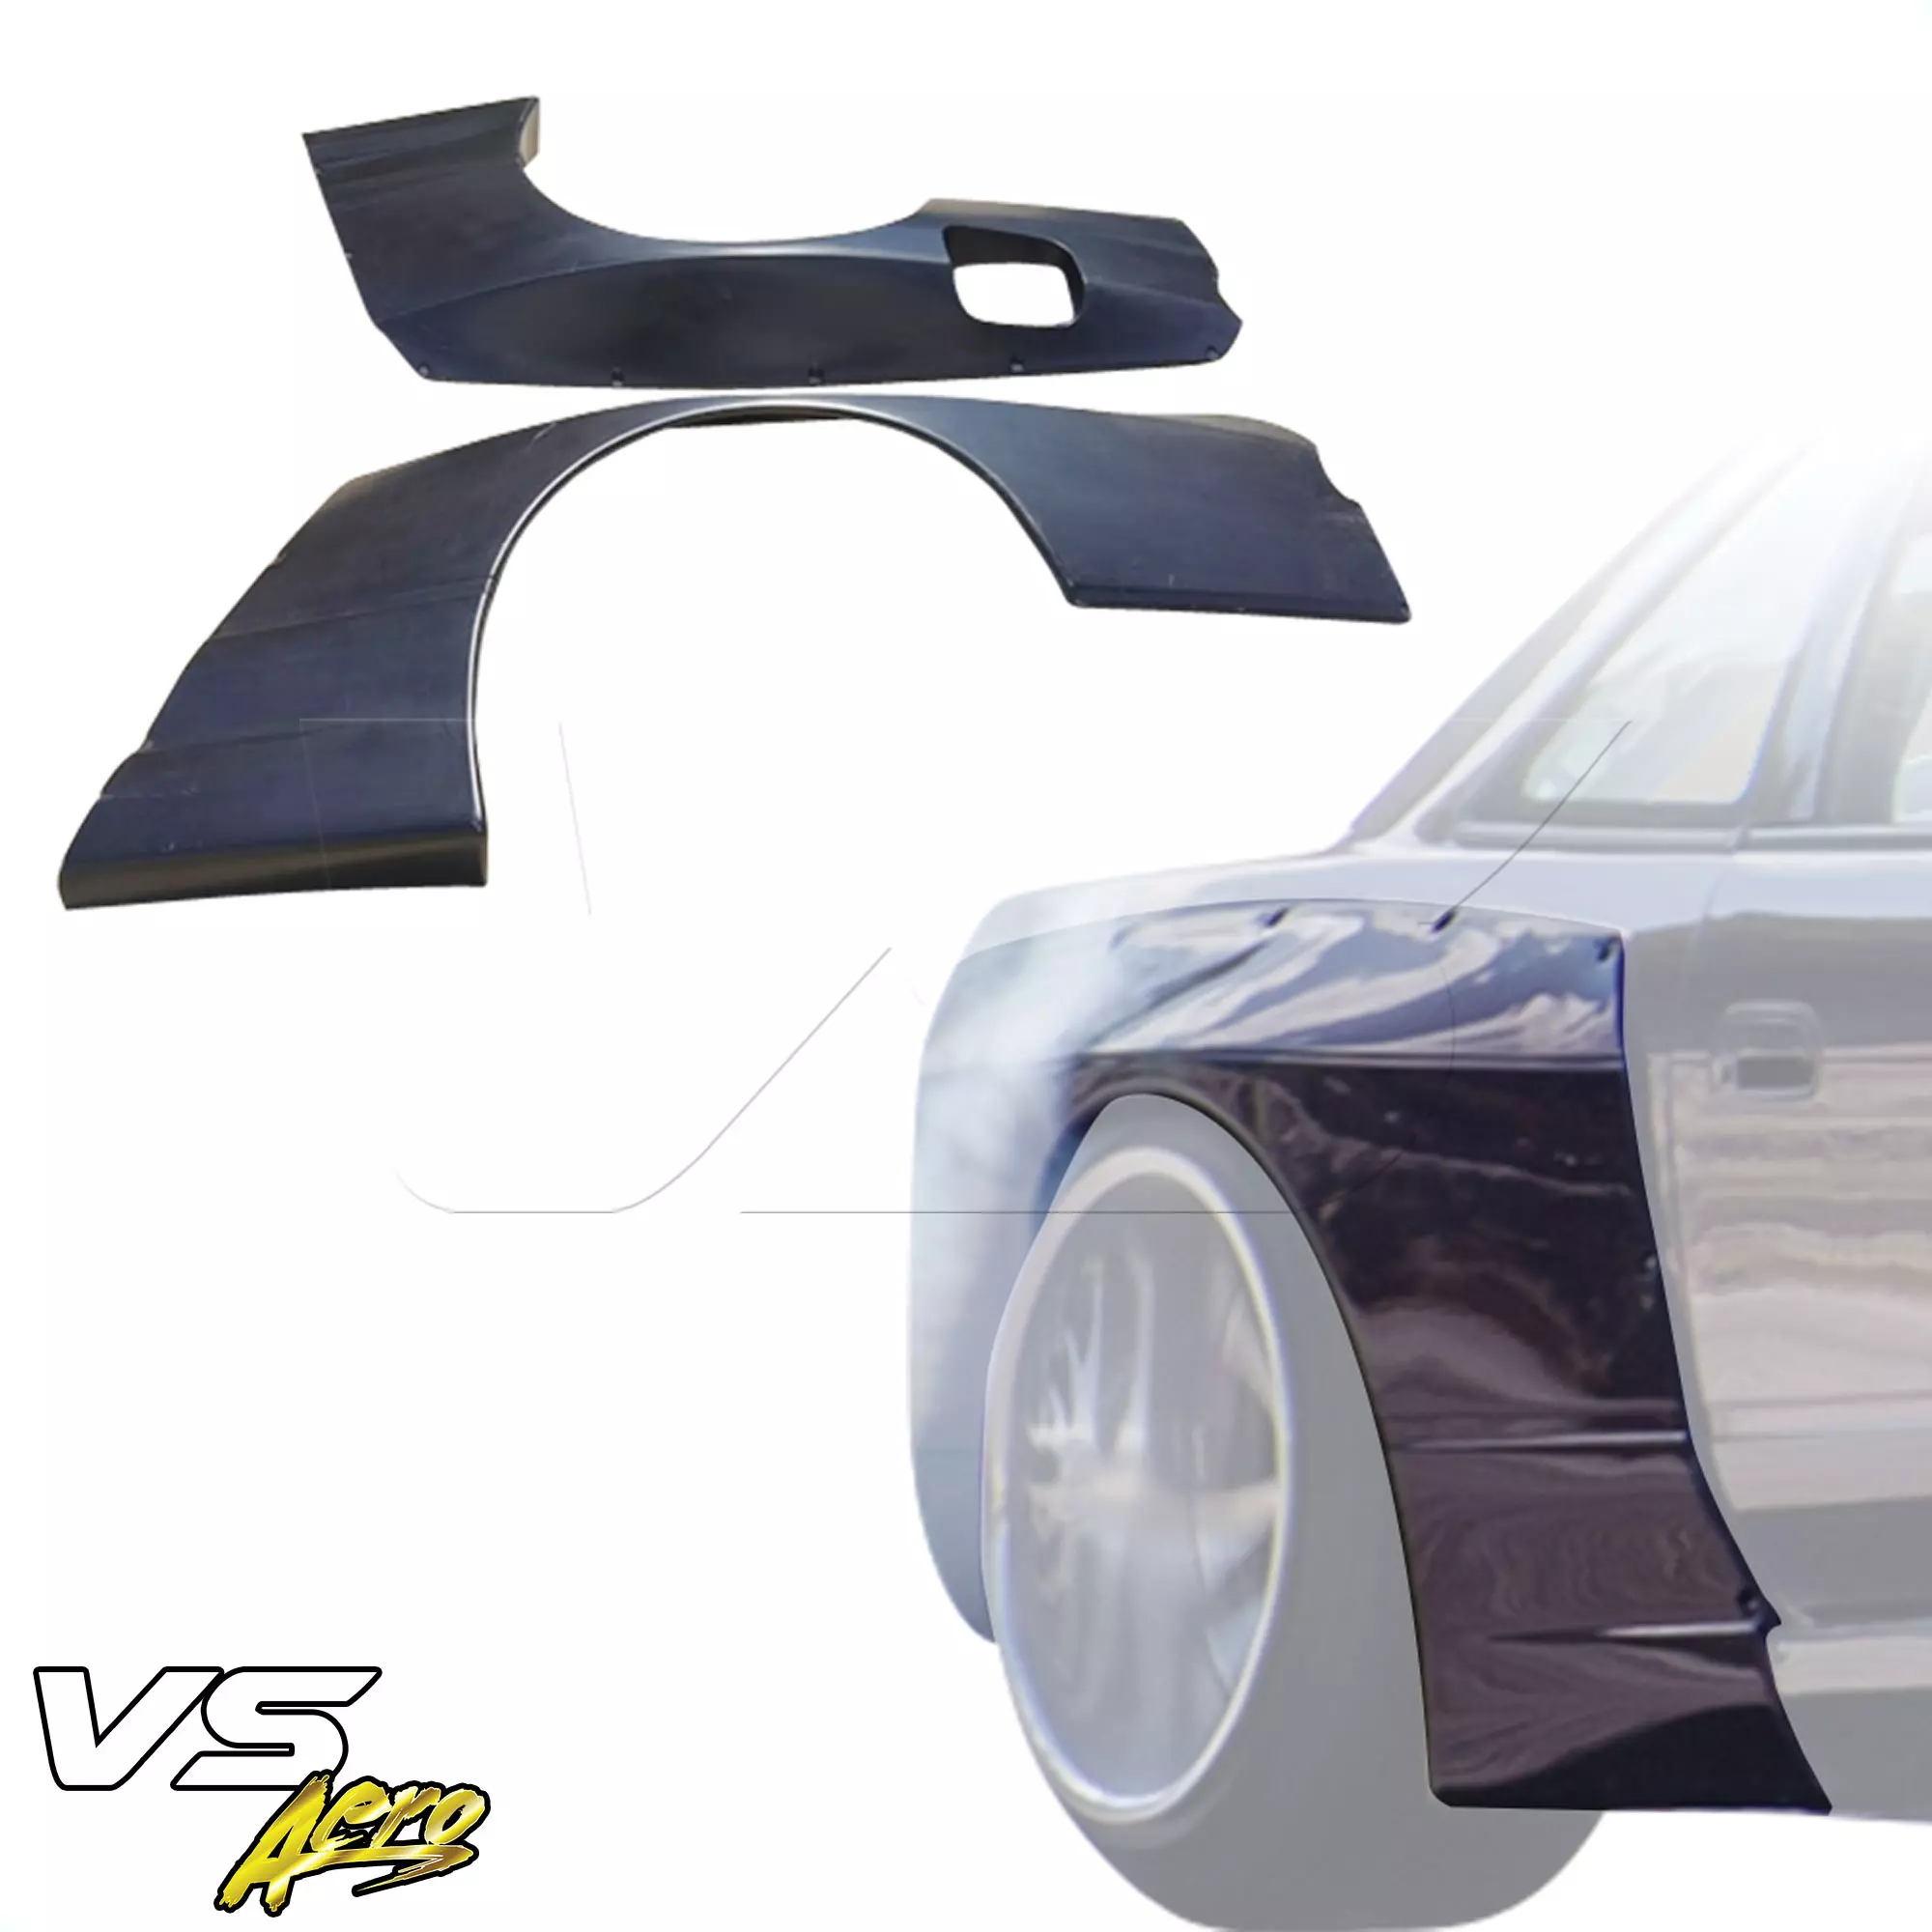 VSaero FRP TKYO v3 Wide Body 110mm Fenders (rear) > Nissan Silvia S13 1989-1994 > 2dr Coupe - Image 1